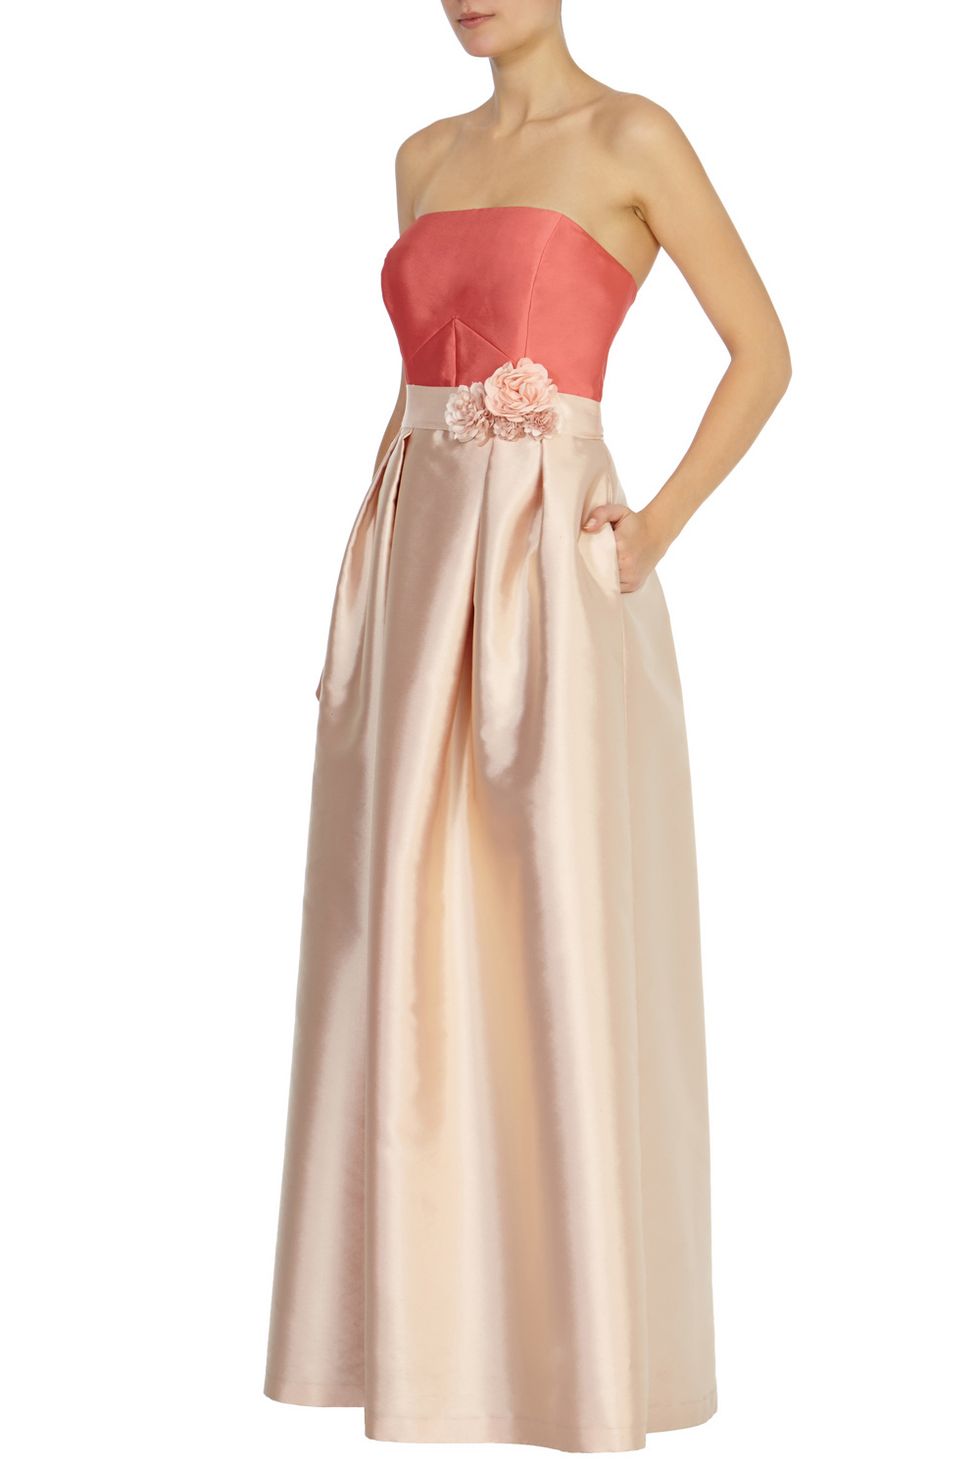 Coast peach bridesmaid dress